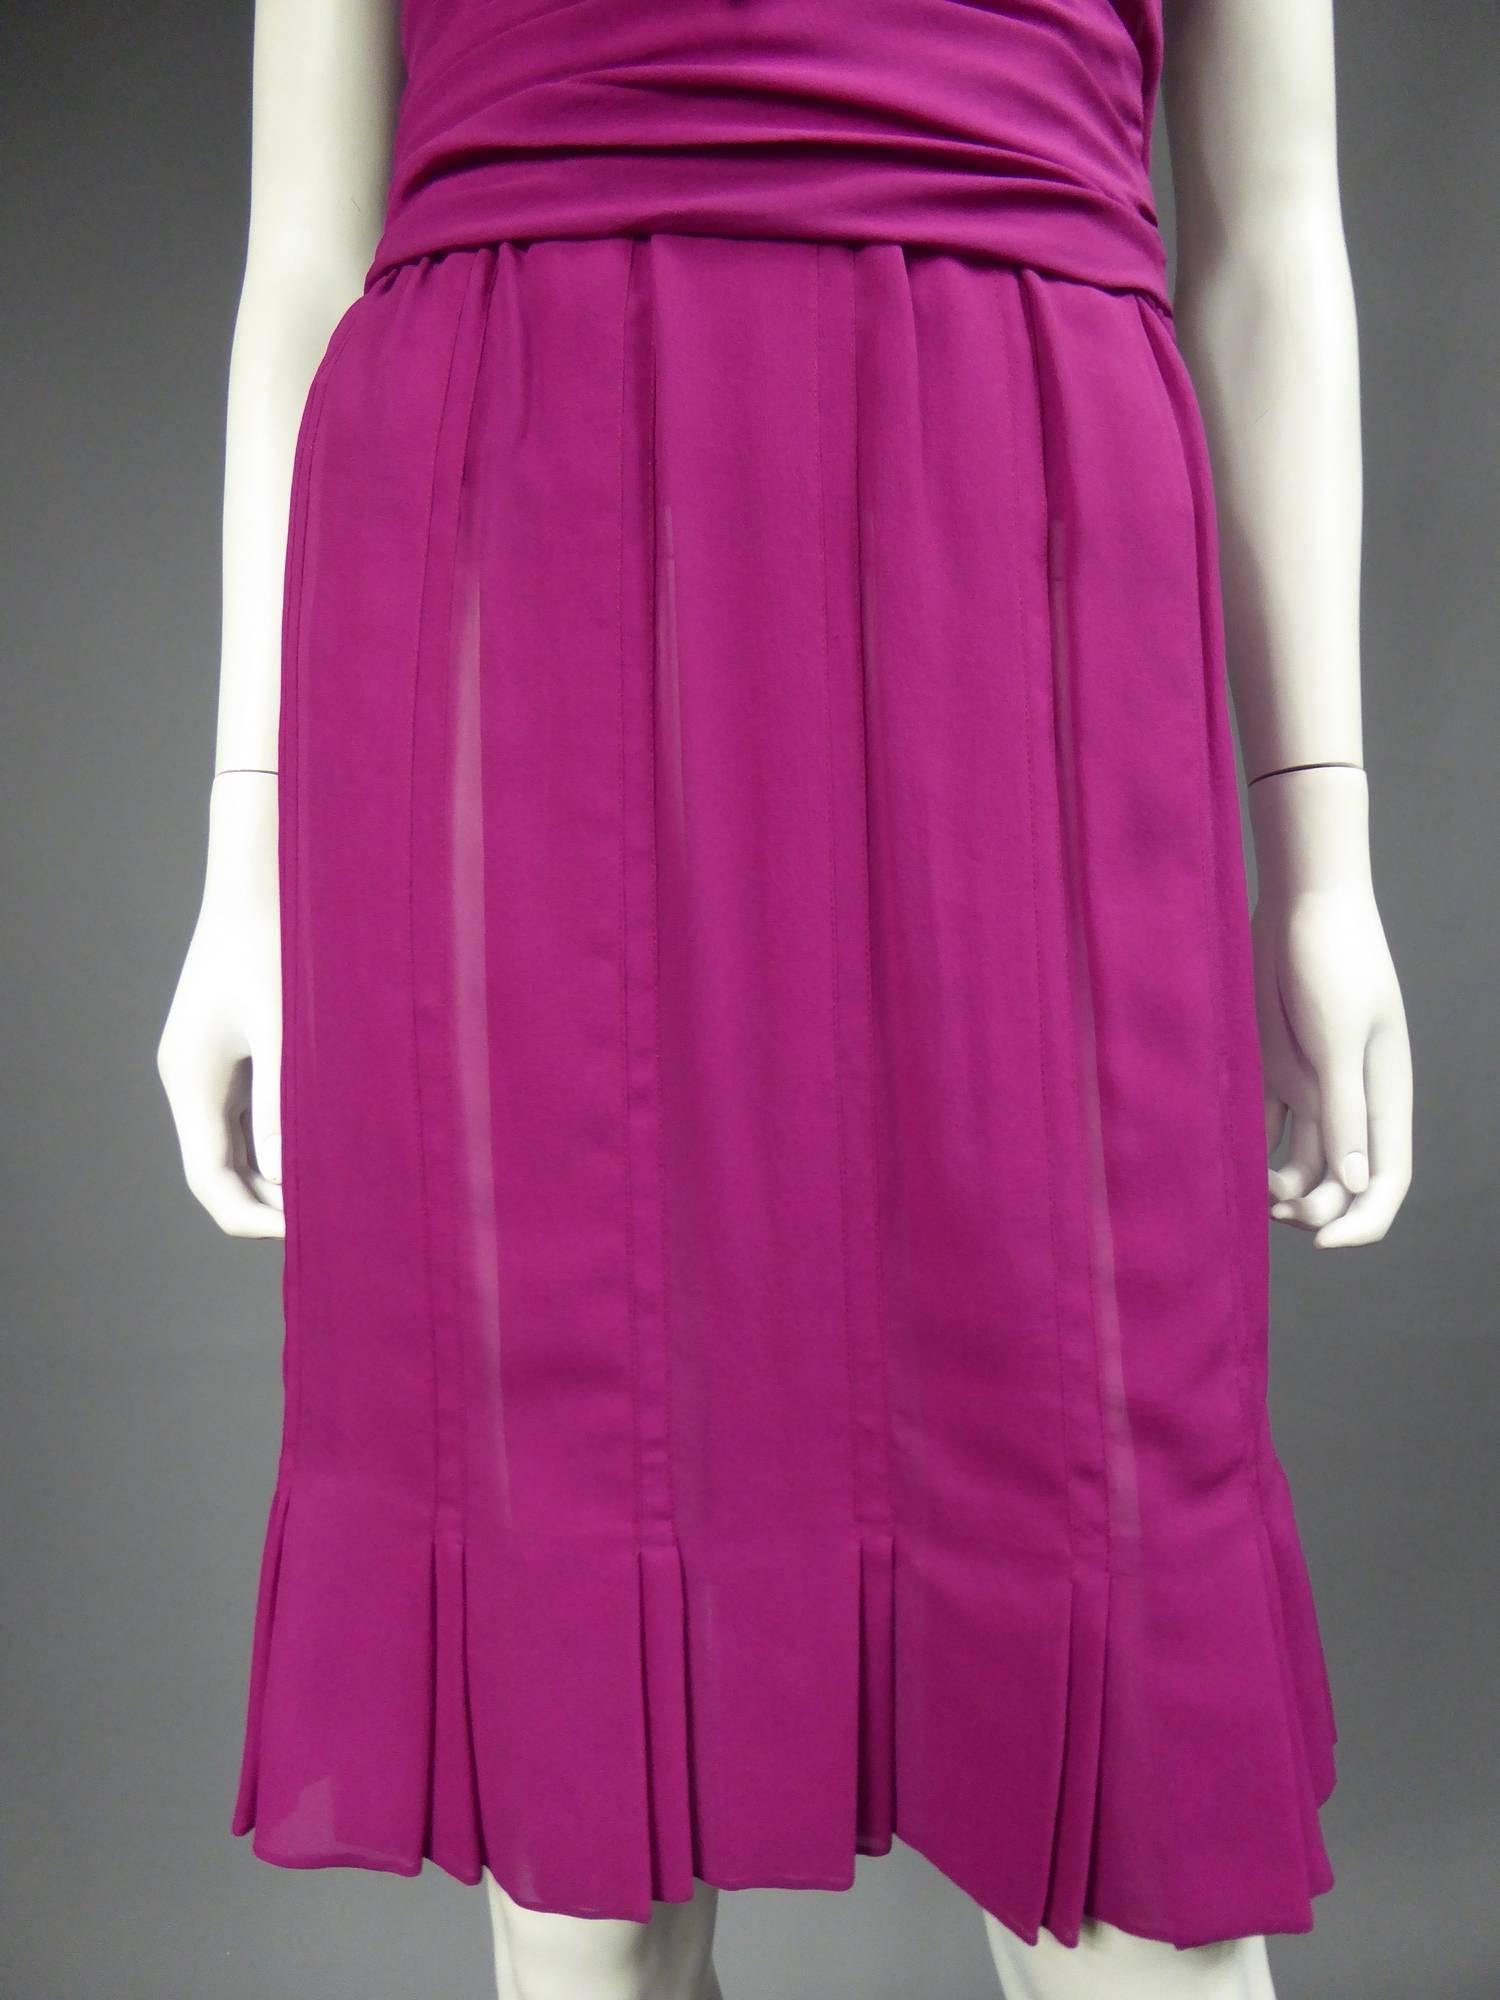 A Christian Dior/Gianfranco Ferré Couture Pink Chiffon Dress  Circa 1990 For Sale 4